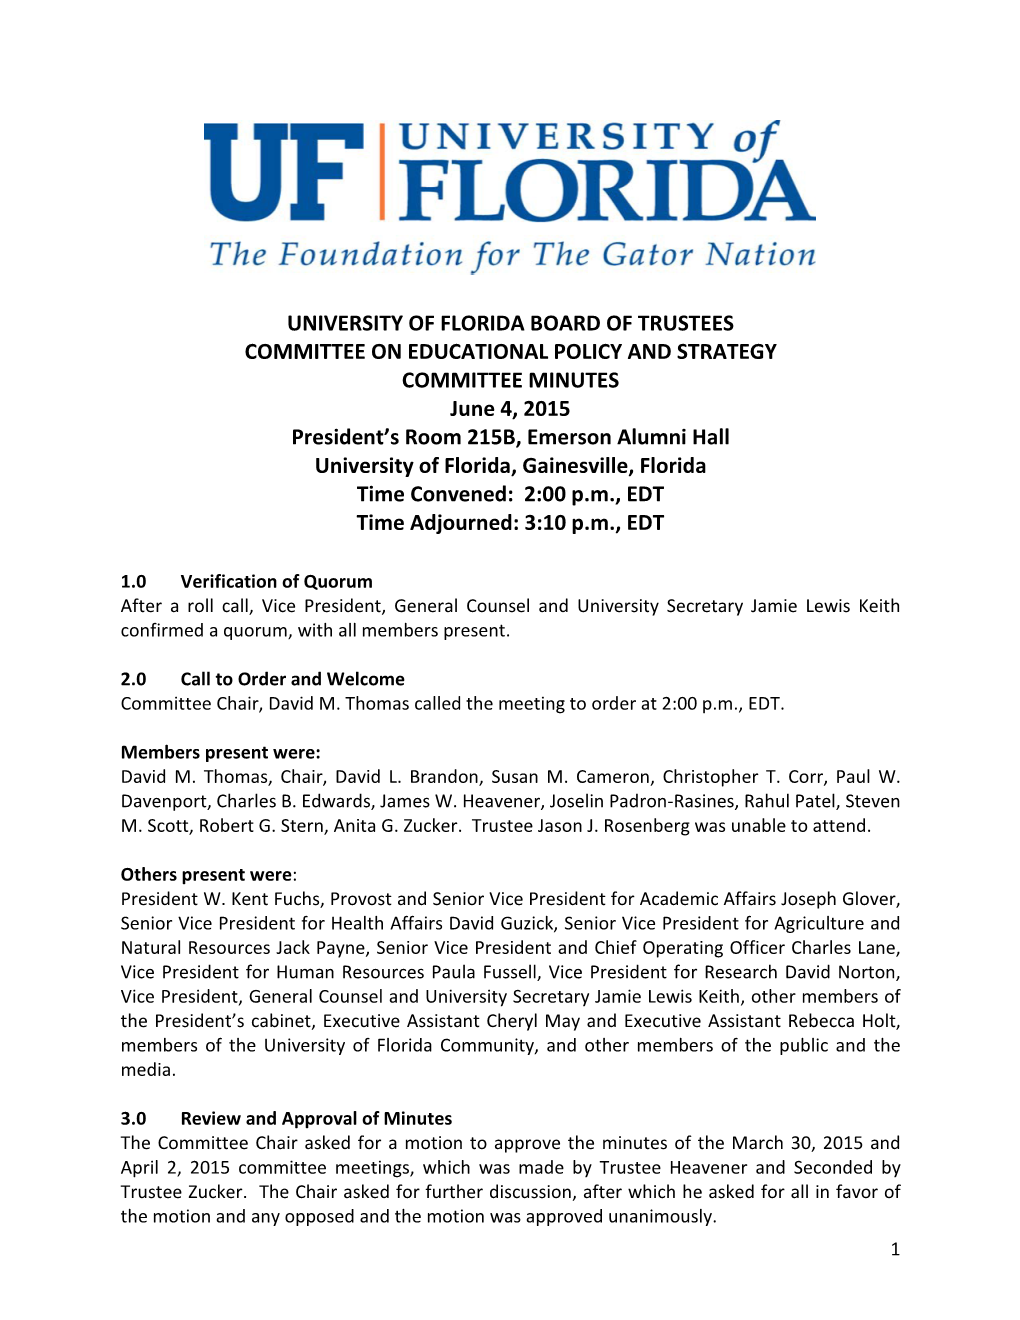 University of Florida Board of Trustees